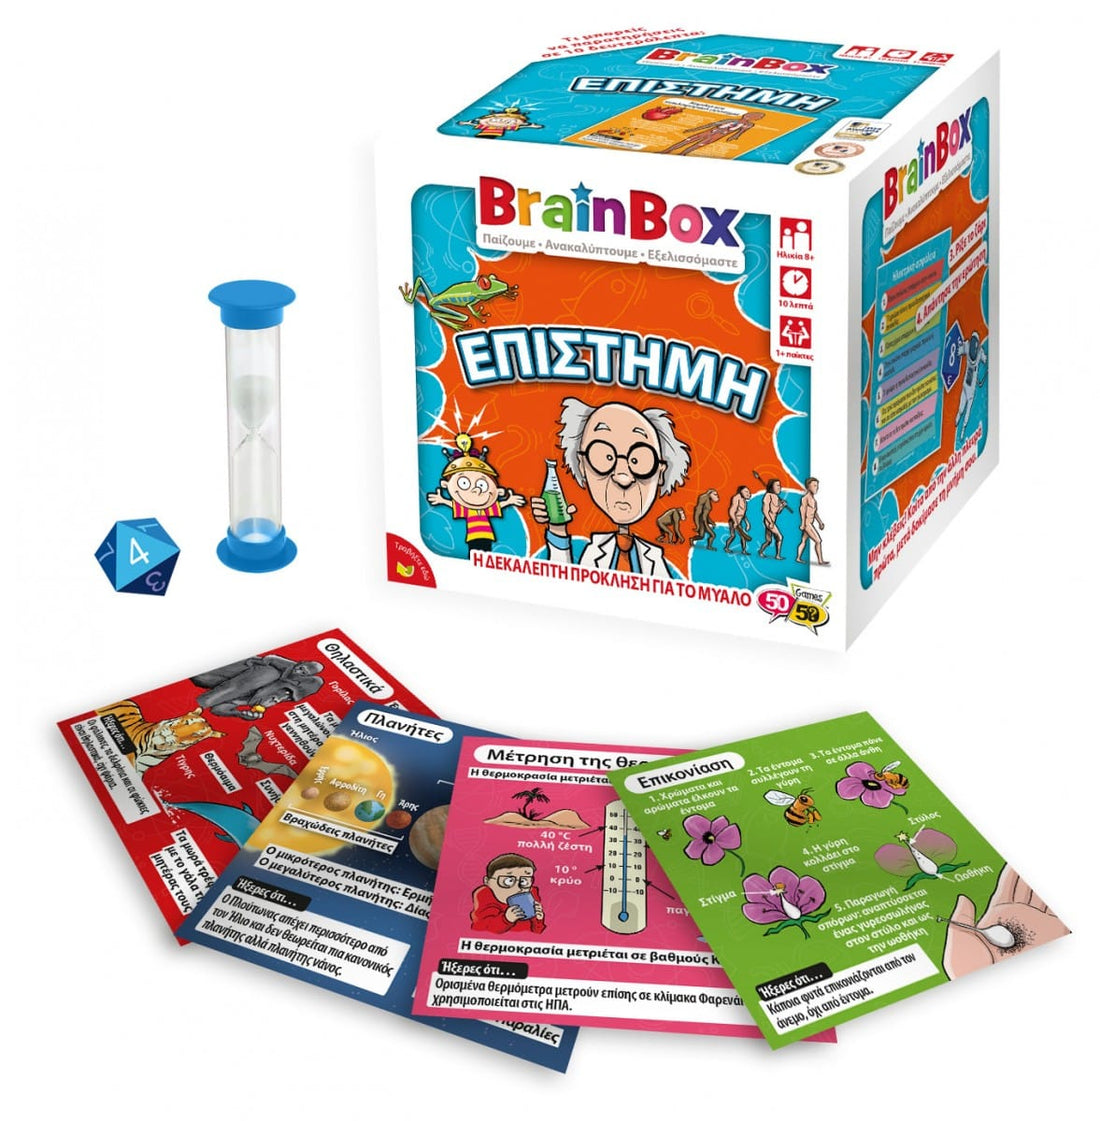 Brainbox Επιστημη Επιτραπεζιο Παιχνιδι